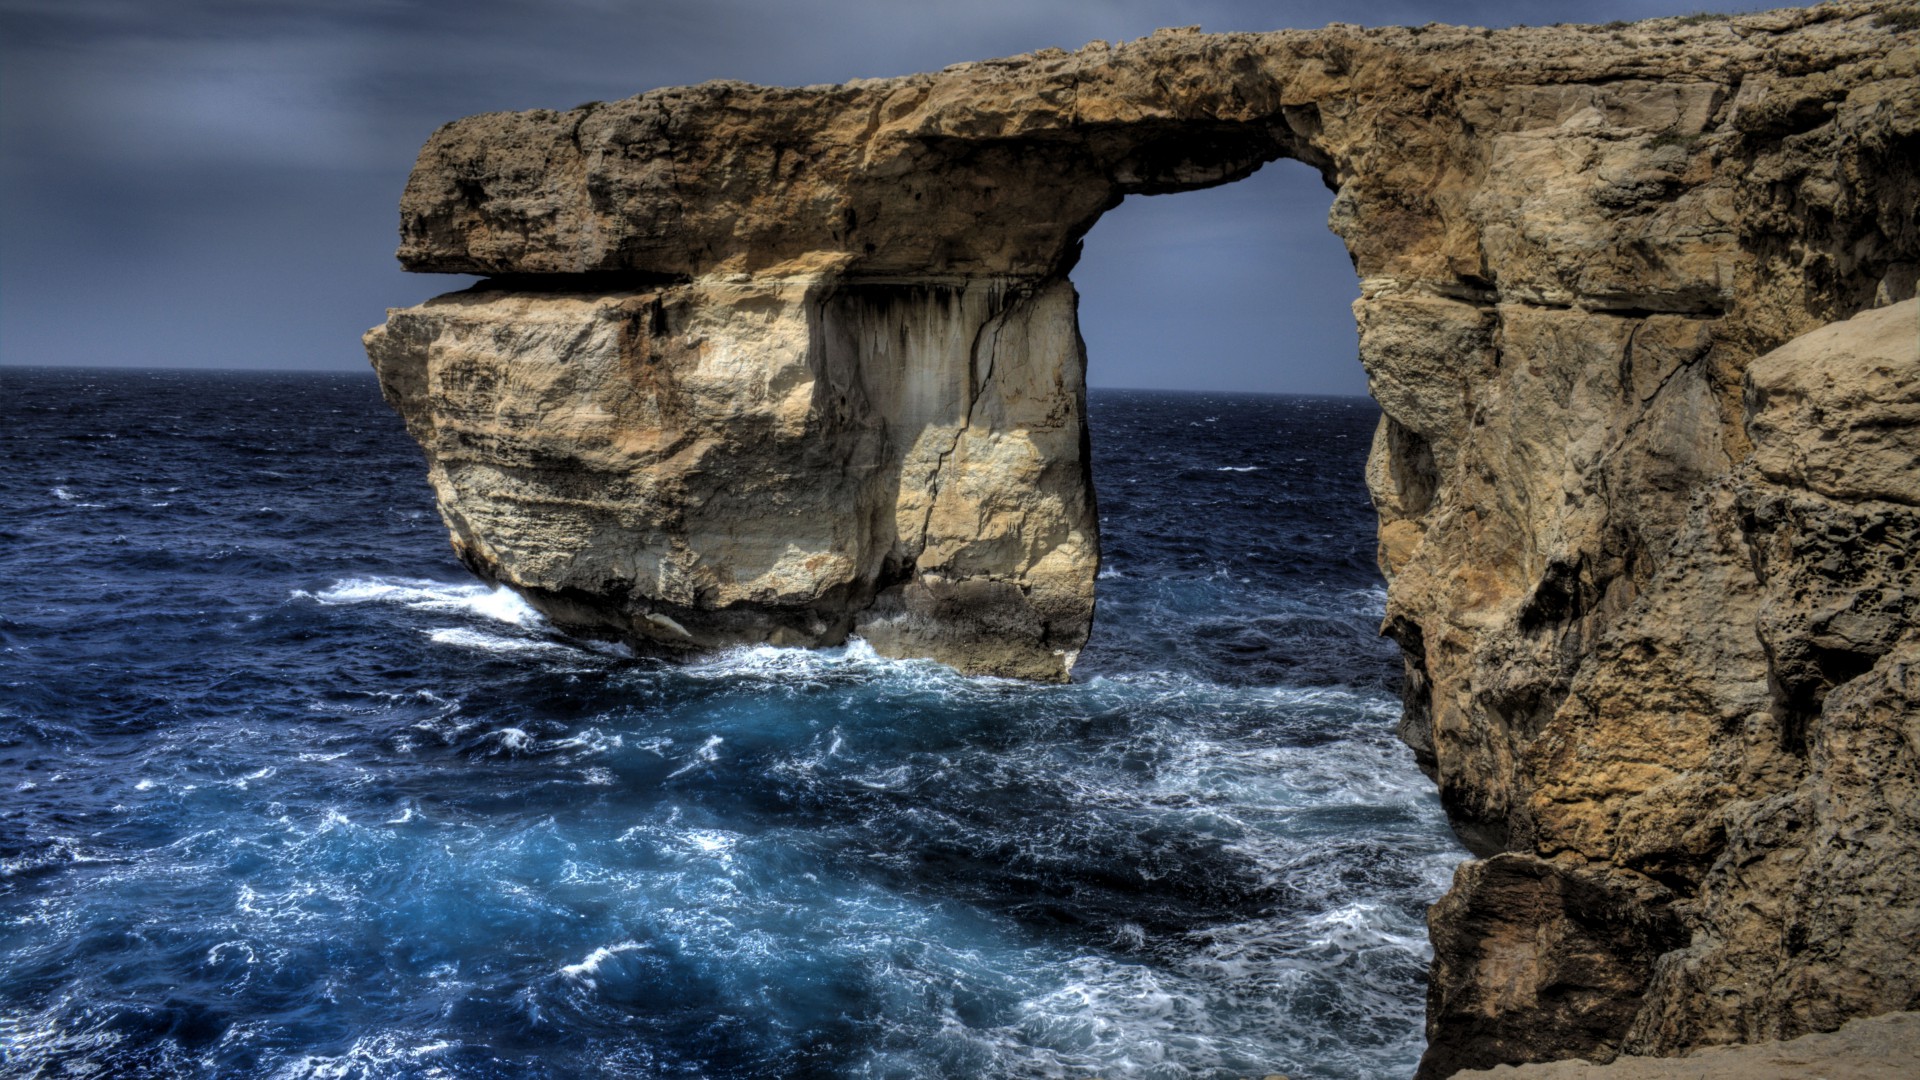 Мальта, 5k, 4k, море, океан, скалы, Malta, 5k, 4k wallpaper, Sea, ocean, rocks (horizontal)